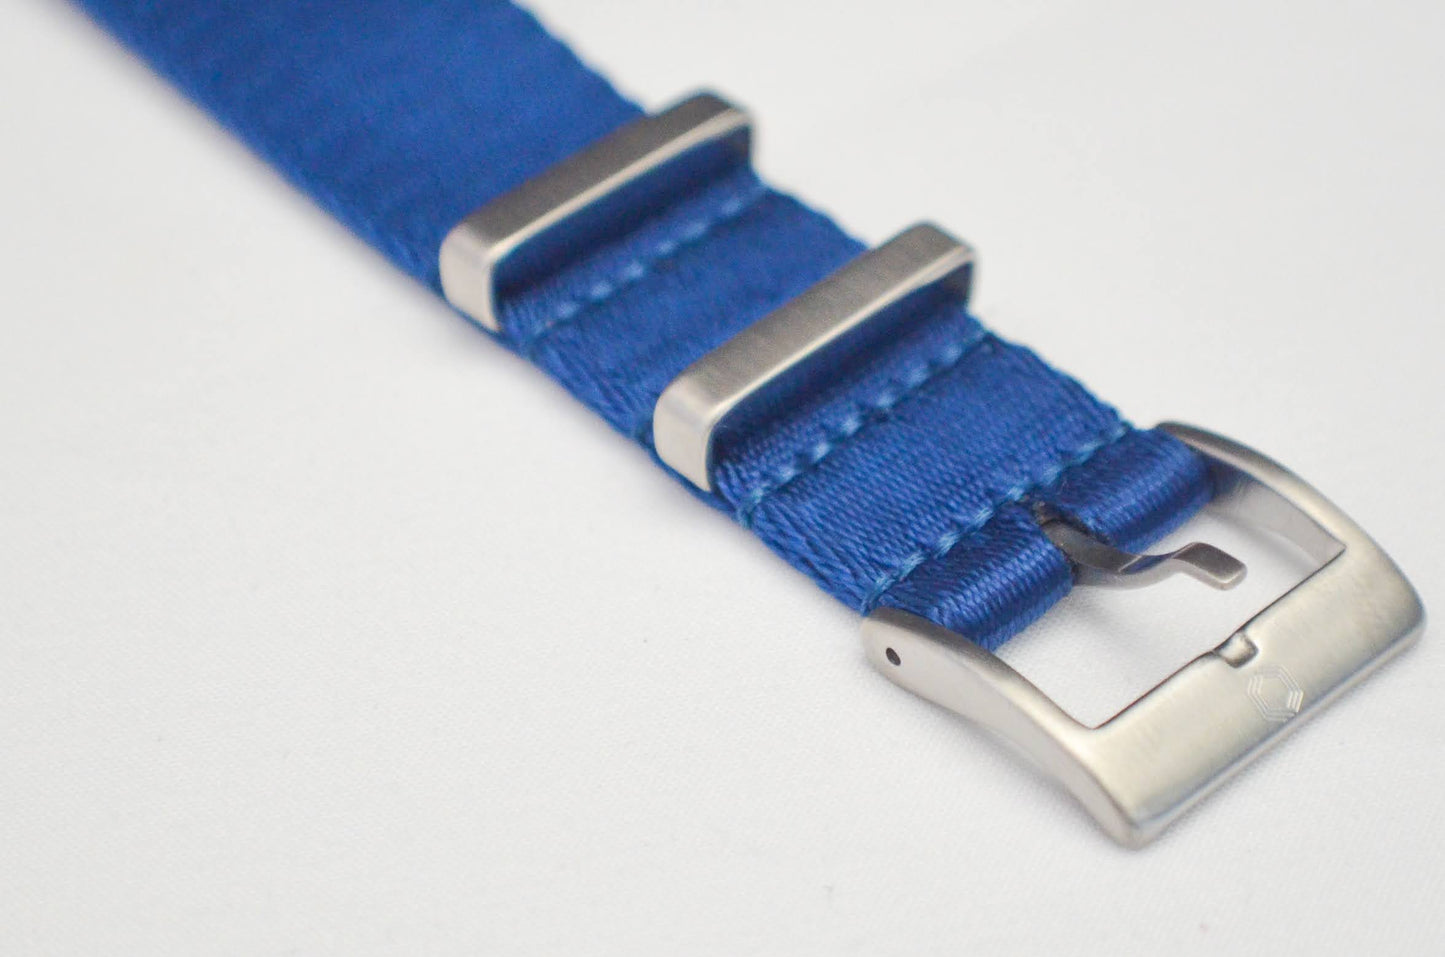 The 'Gimli' - Single pass blue watch strap made of a soft seatbelt nylon